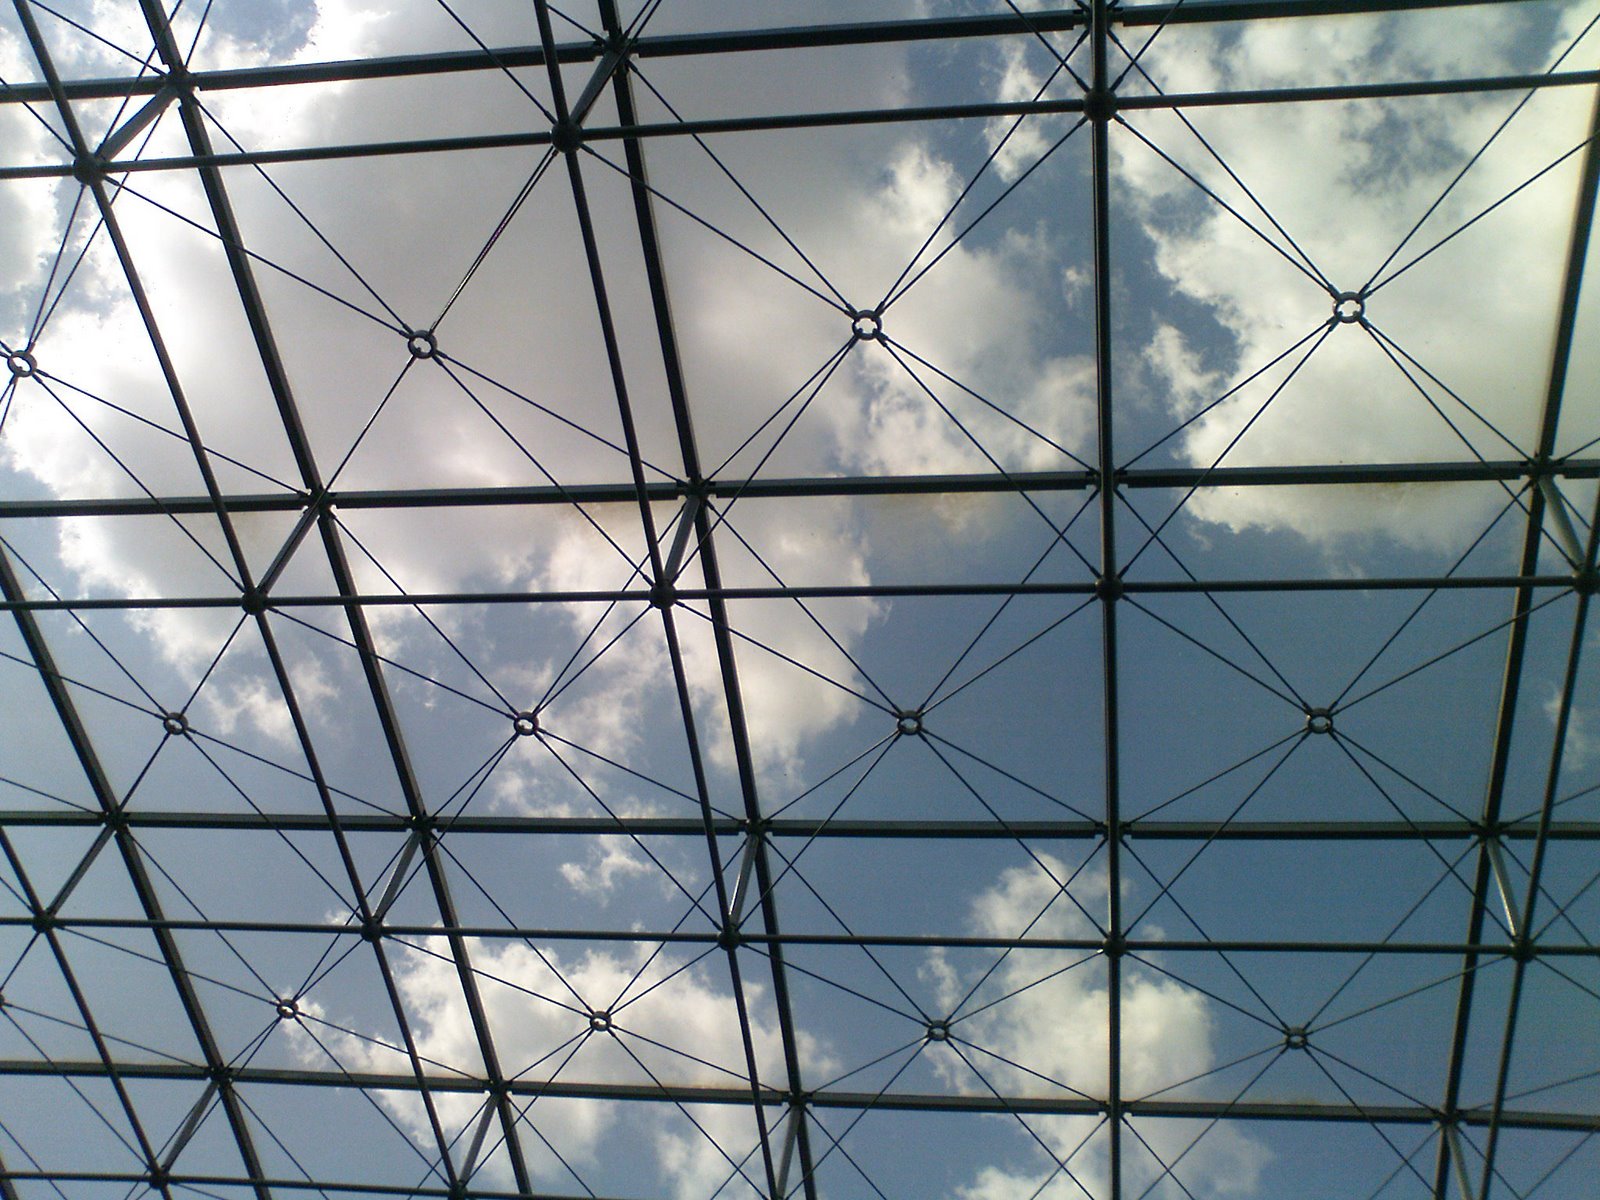 [5.+Clouds+through+glass+roof.JPG]